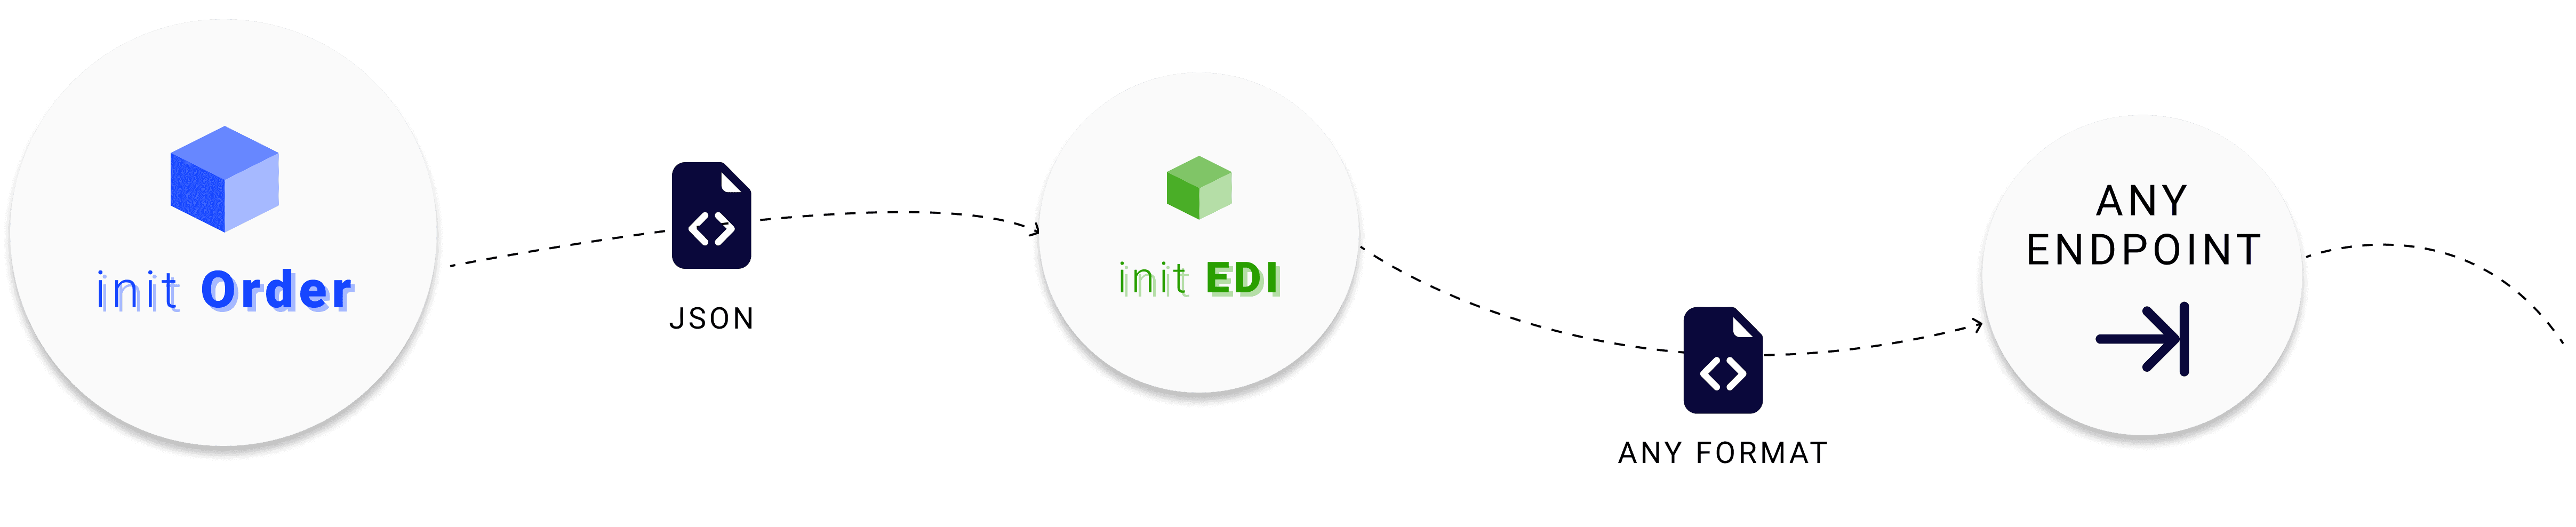 init Order process